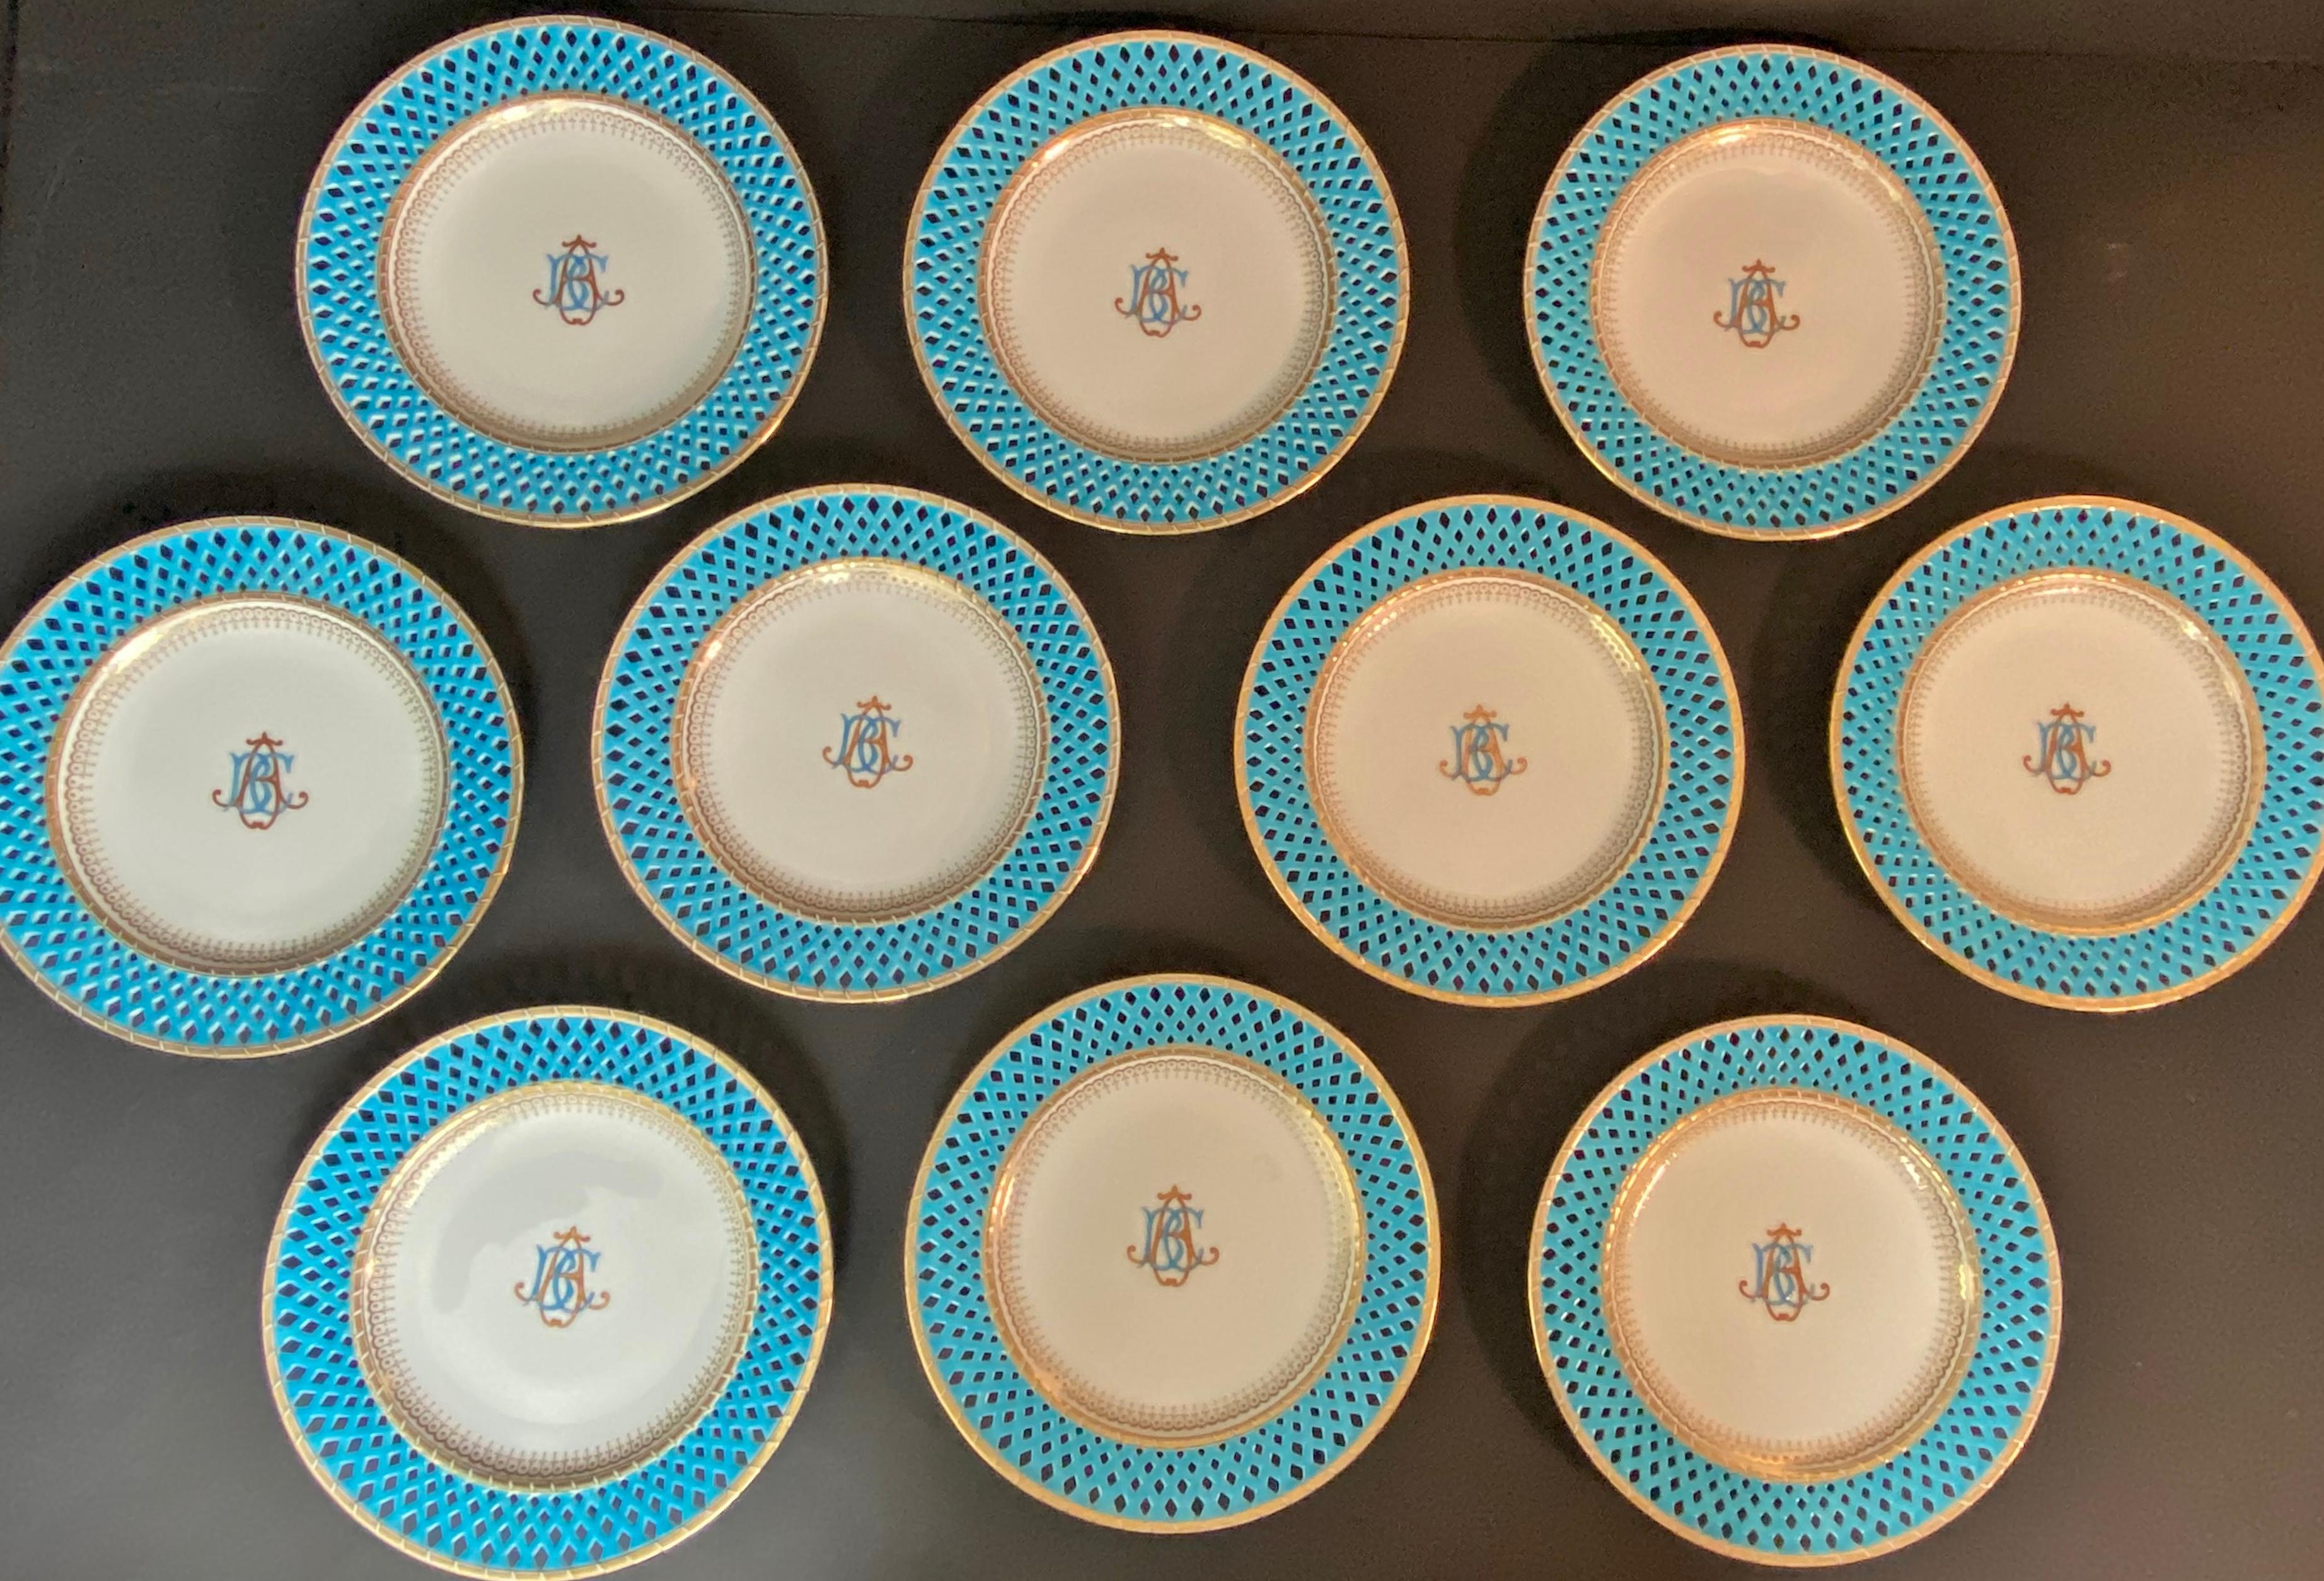 19th Century Mintons Presentation Plates for Thomas Goode & Co., Set of 10